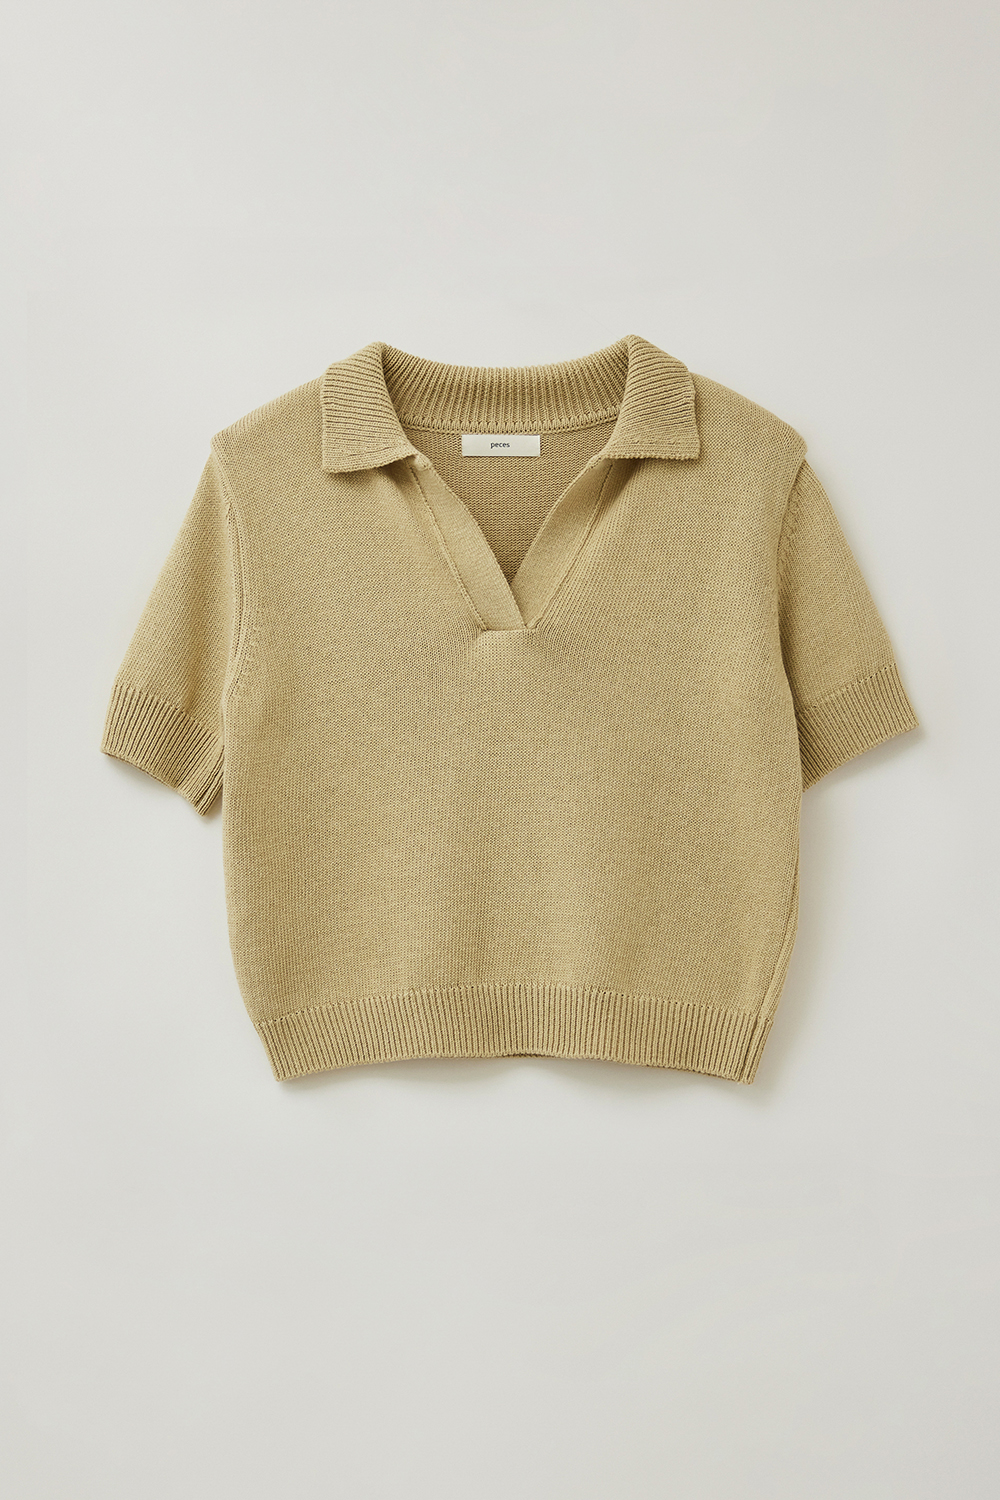 Cotton Pullover Knit (khaki)